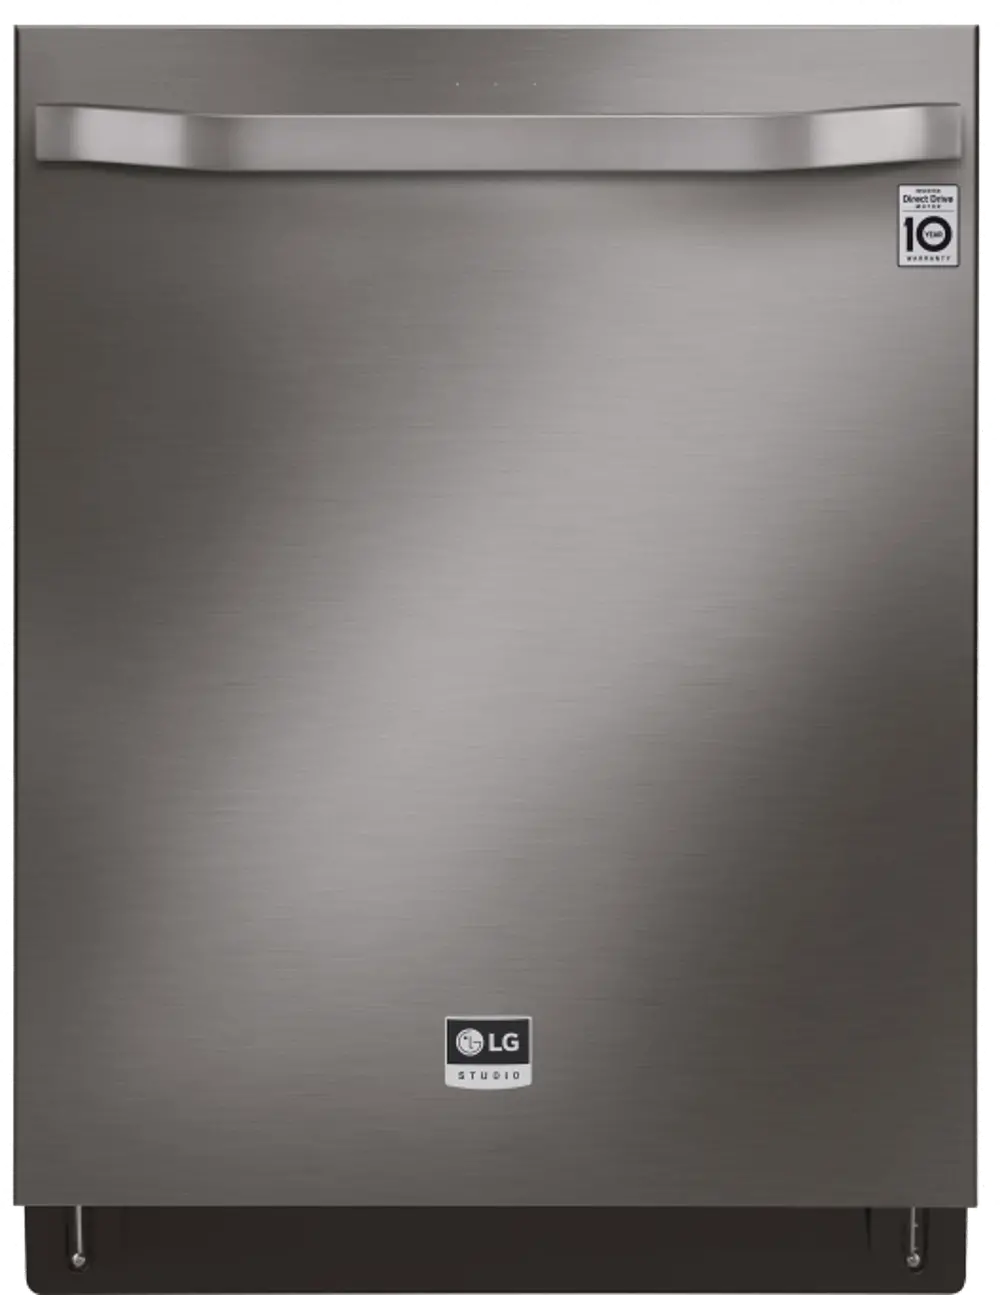 LSDT9908BD LG Studio Dishwasher - Black Stainless Steel-1